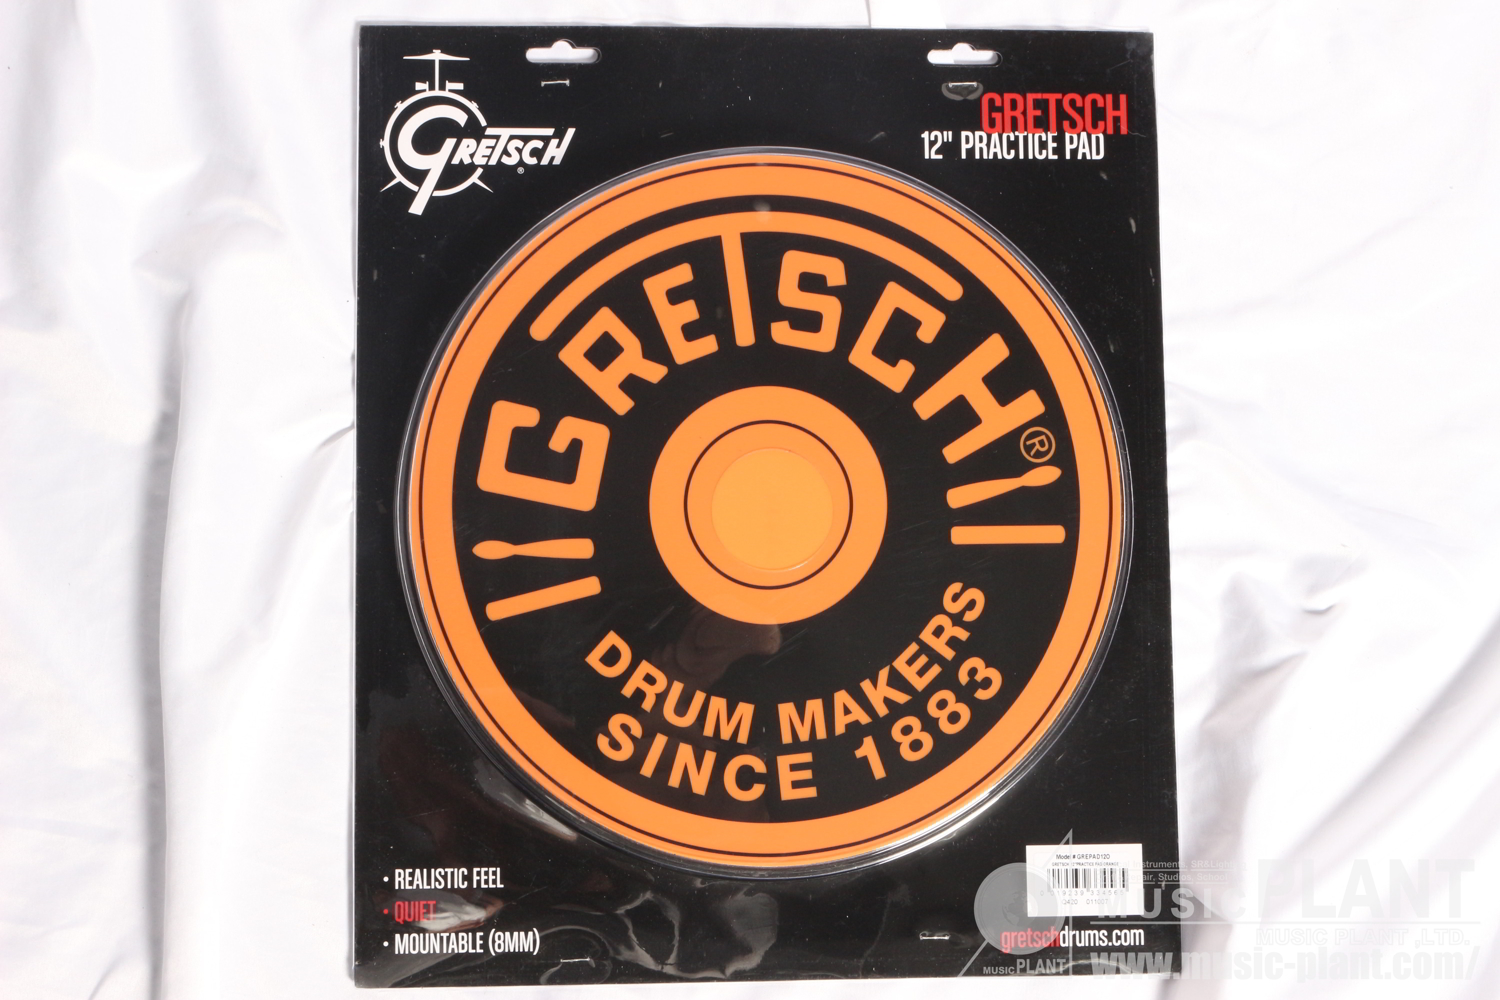 GRETSCH 練習用パッドRound Badge Practice Pad 12quot; GREPAD12O (Orange)新品在庫あります!  MUSIC PLANT WEBSHOP